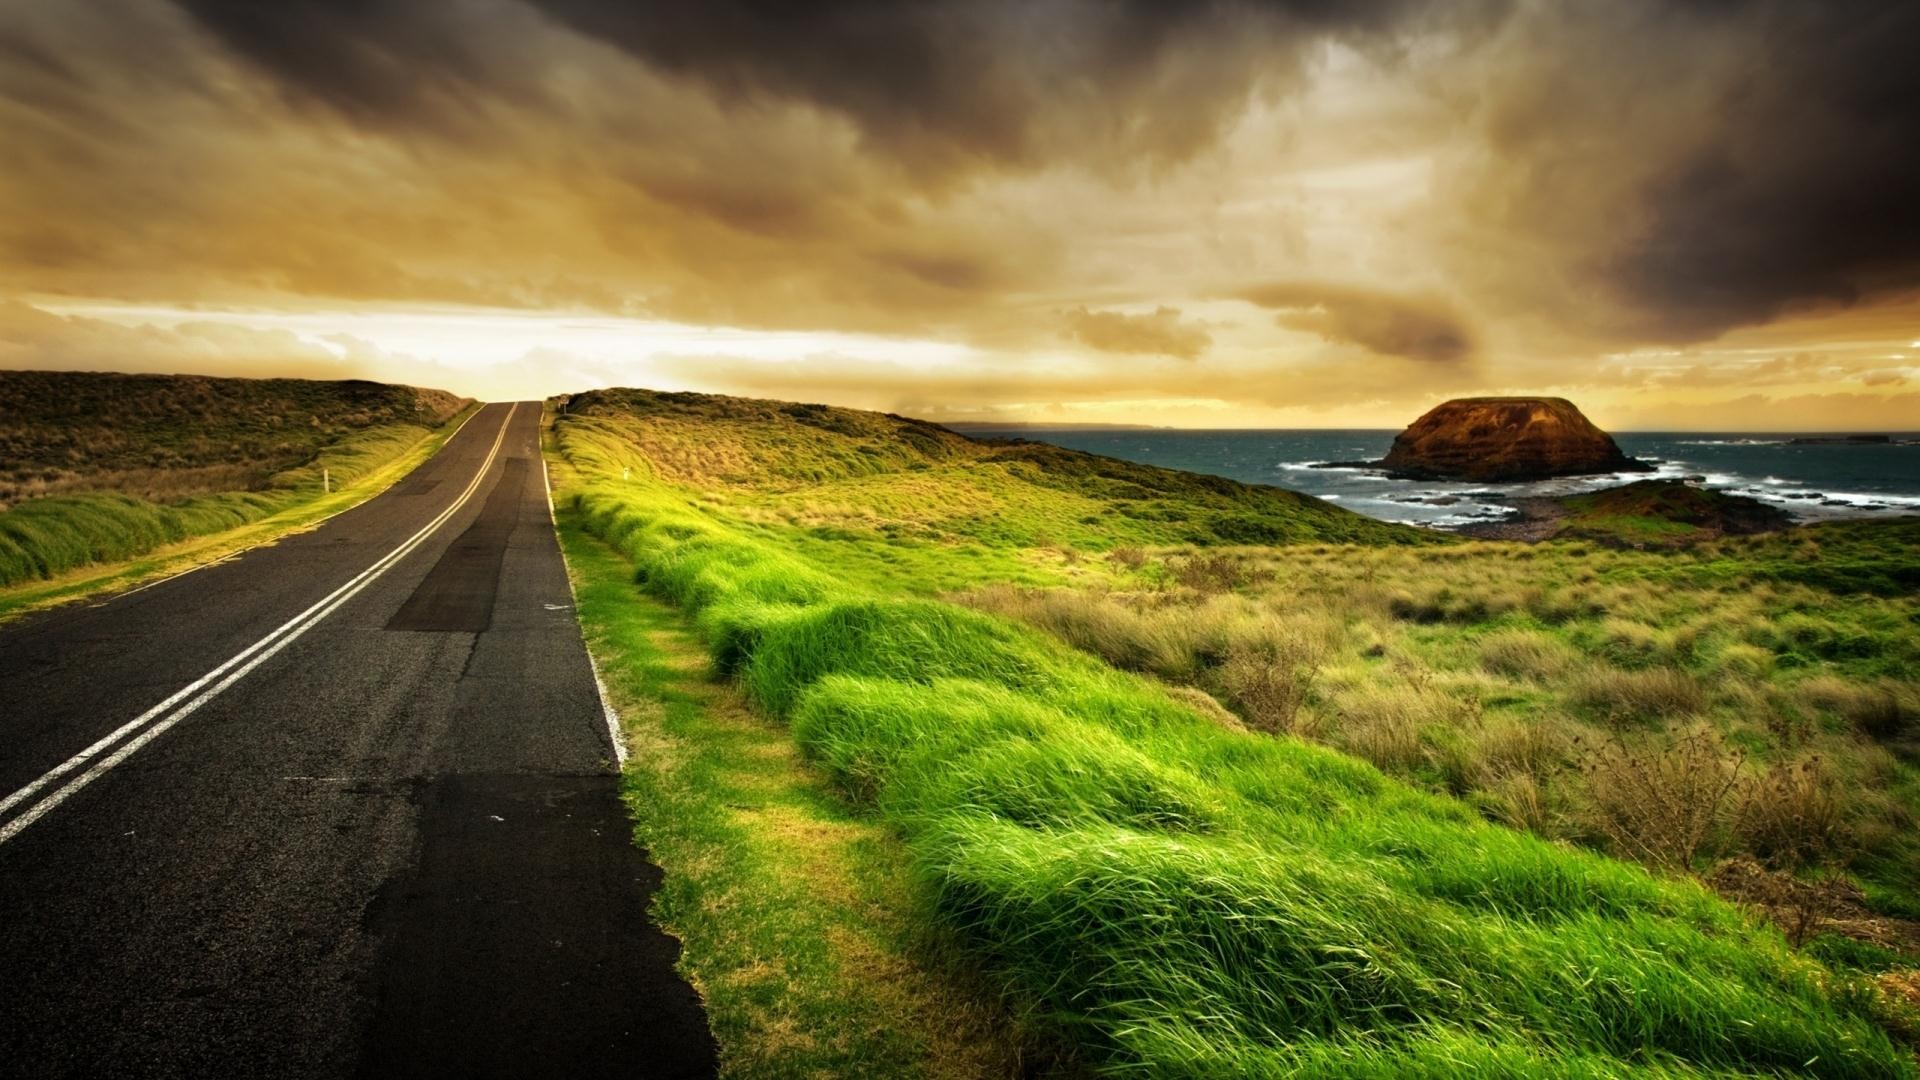 Road HD Wallpaper Horizon And Landscape Full Digital